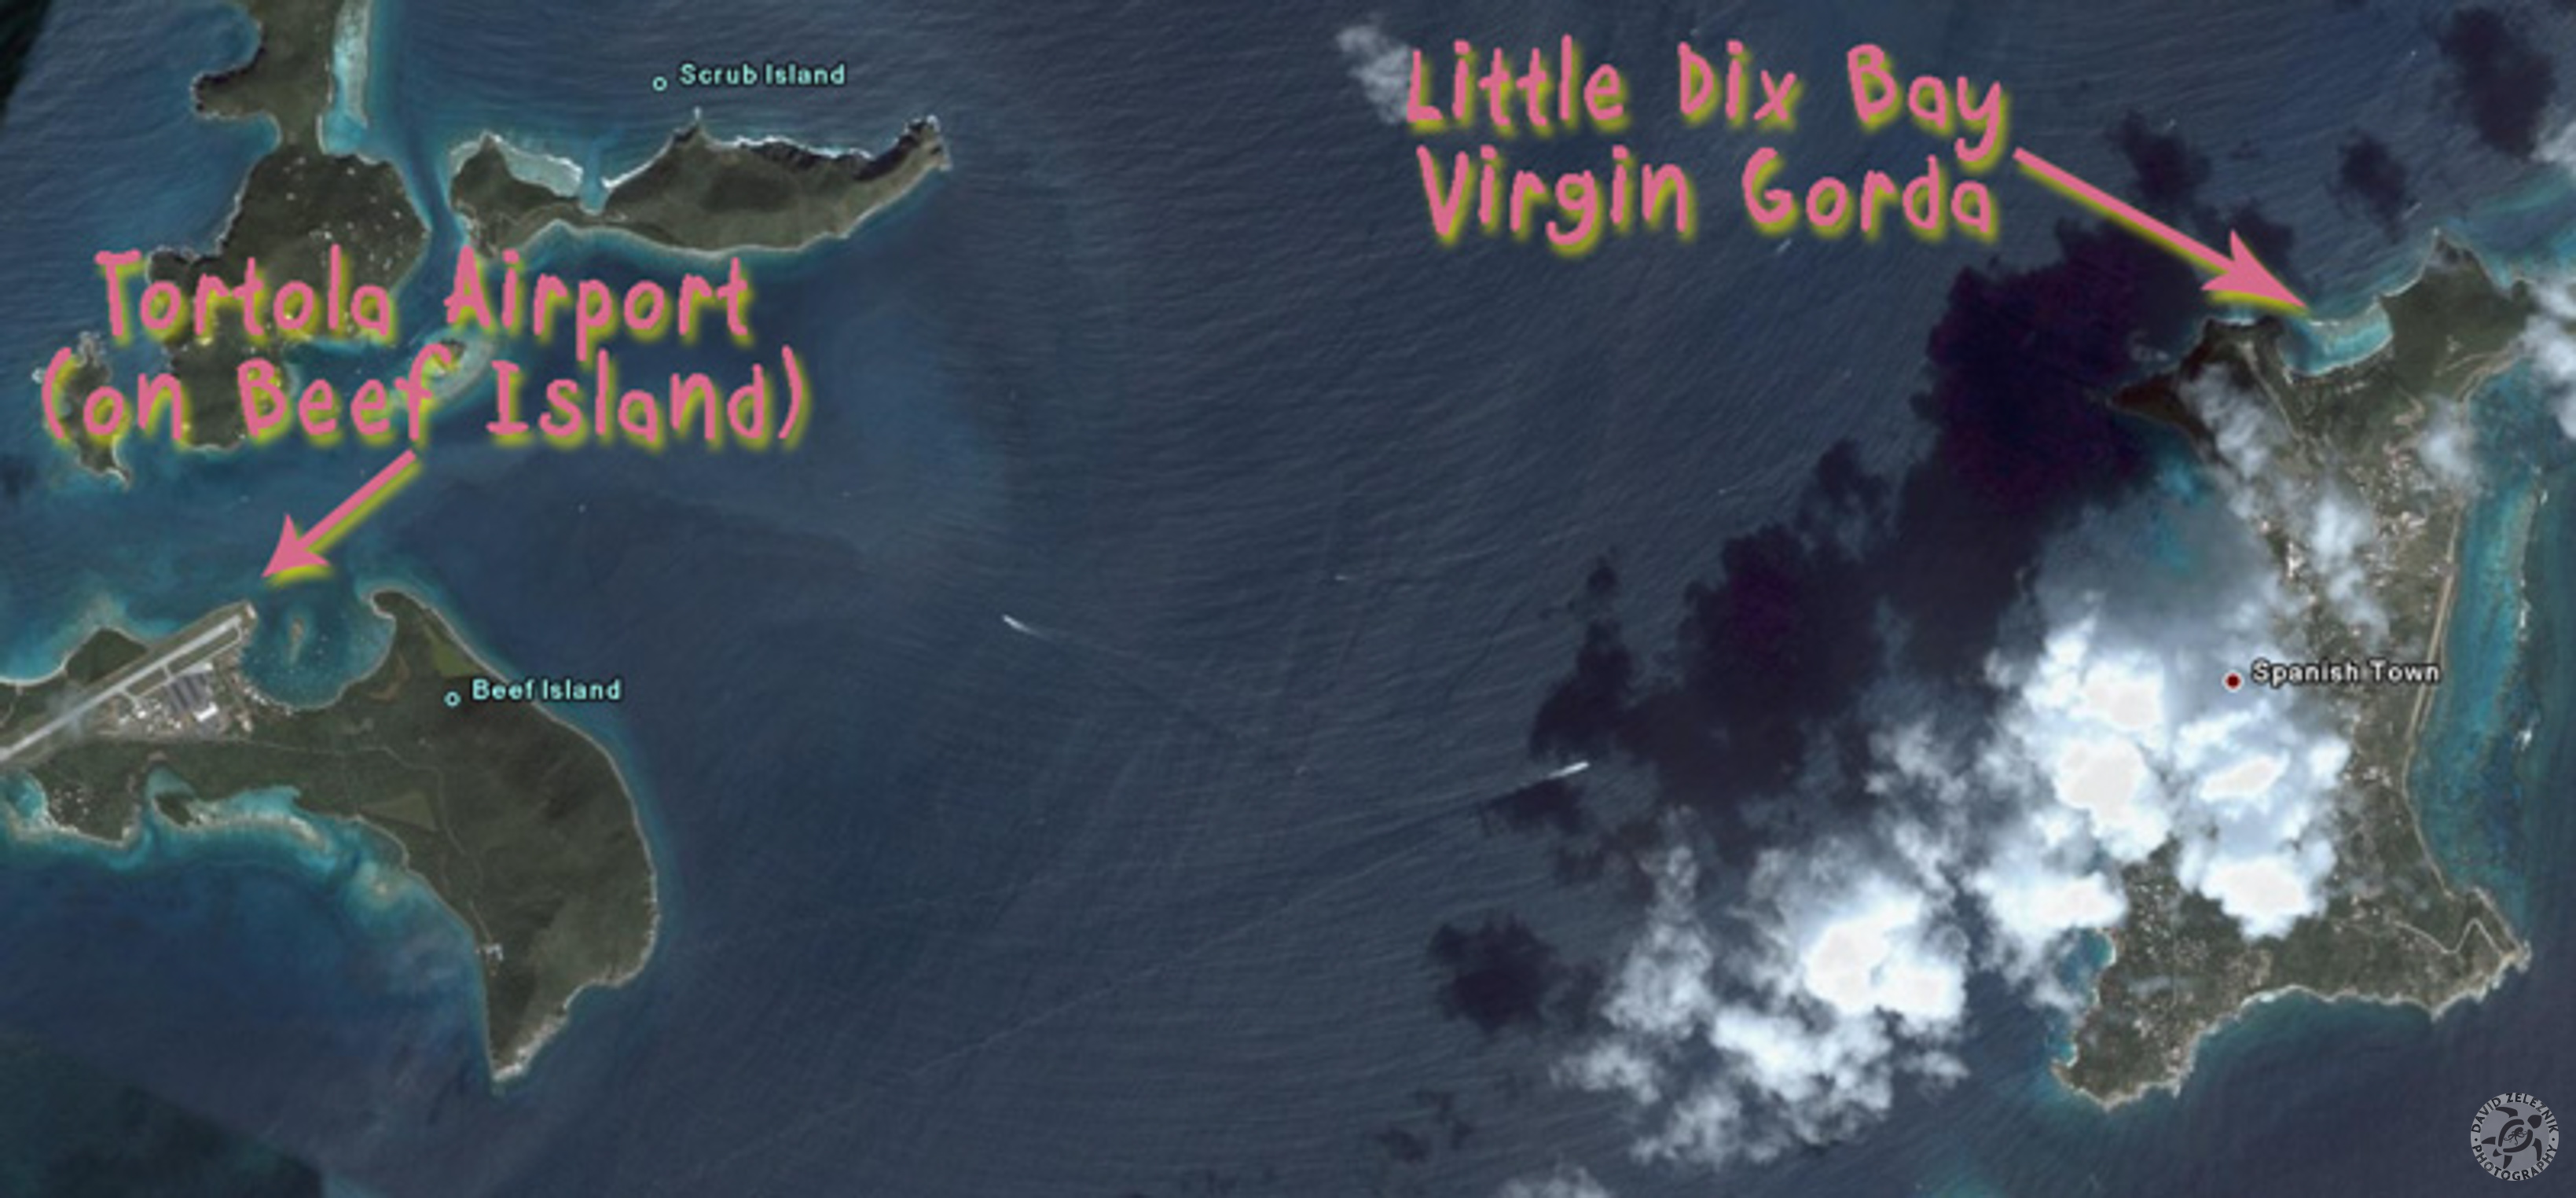 VirginGorda-Map3